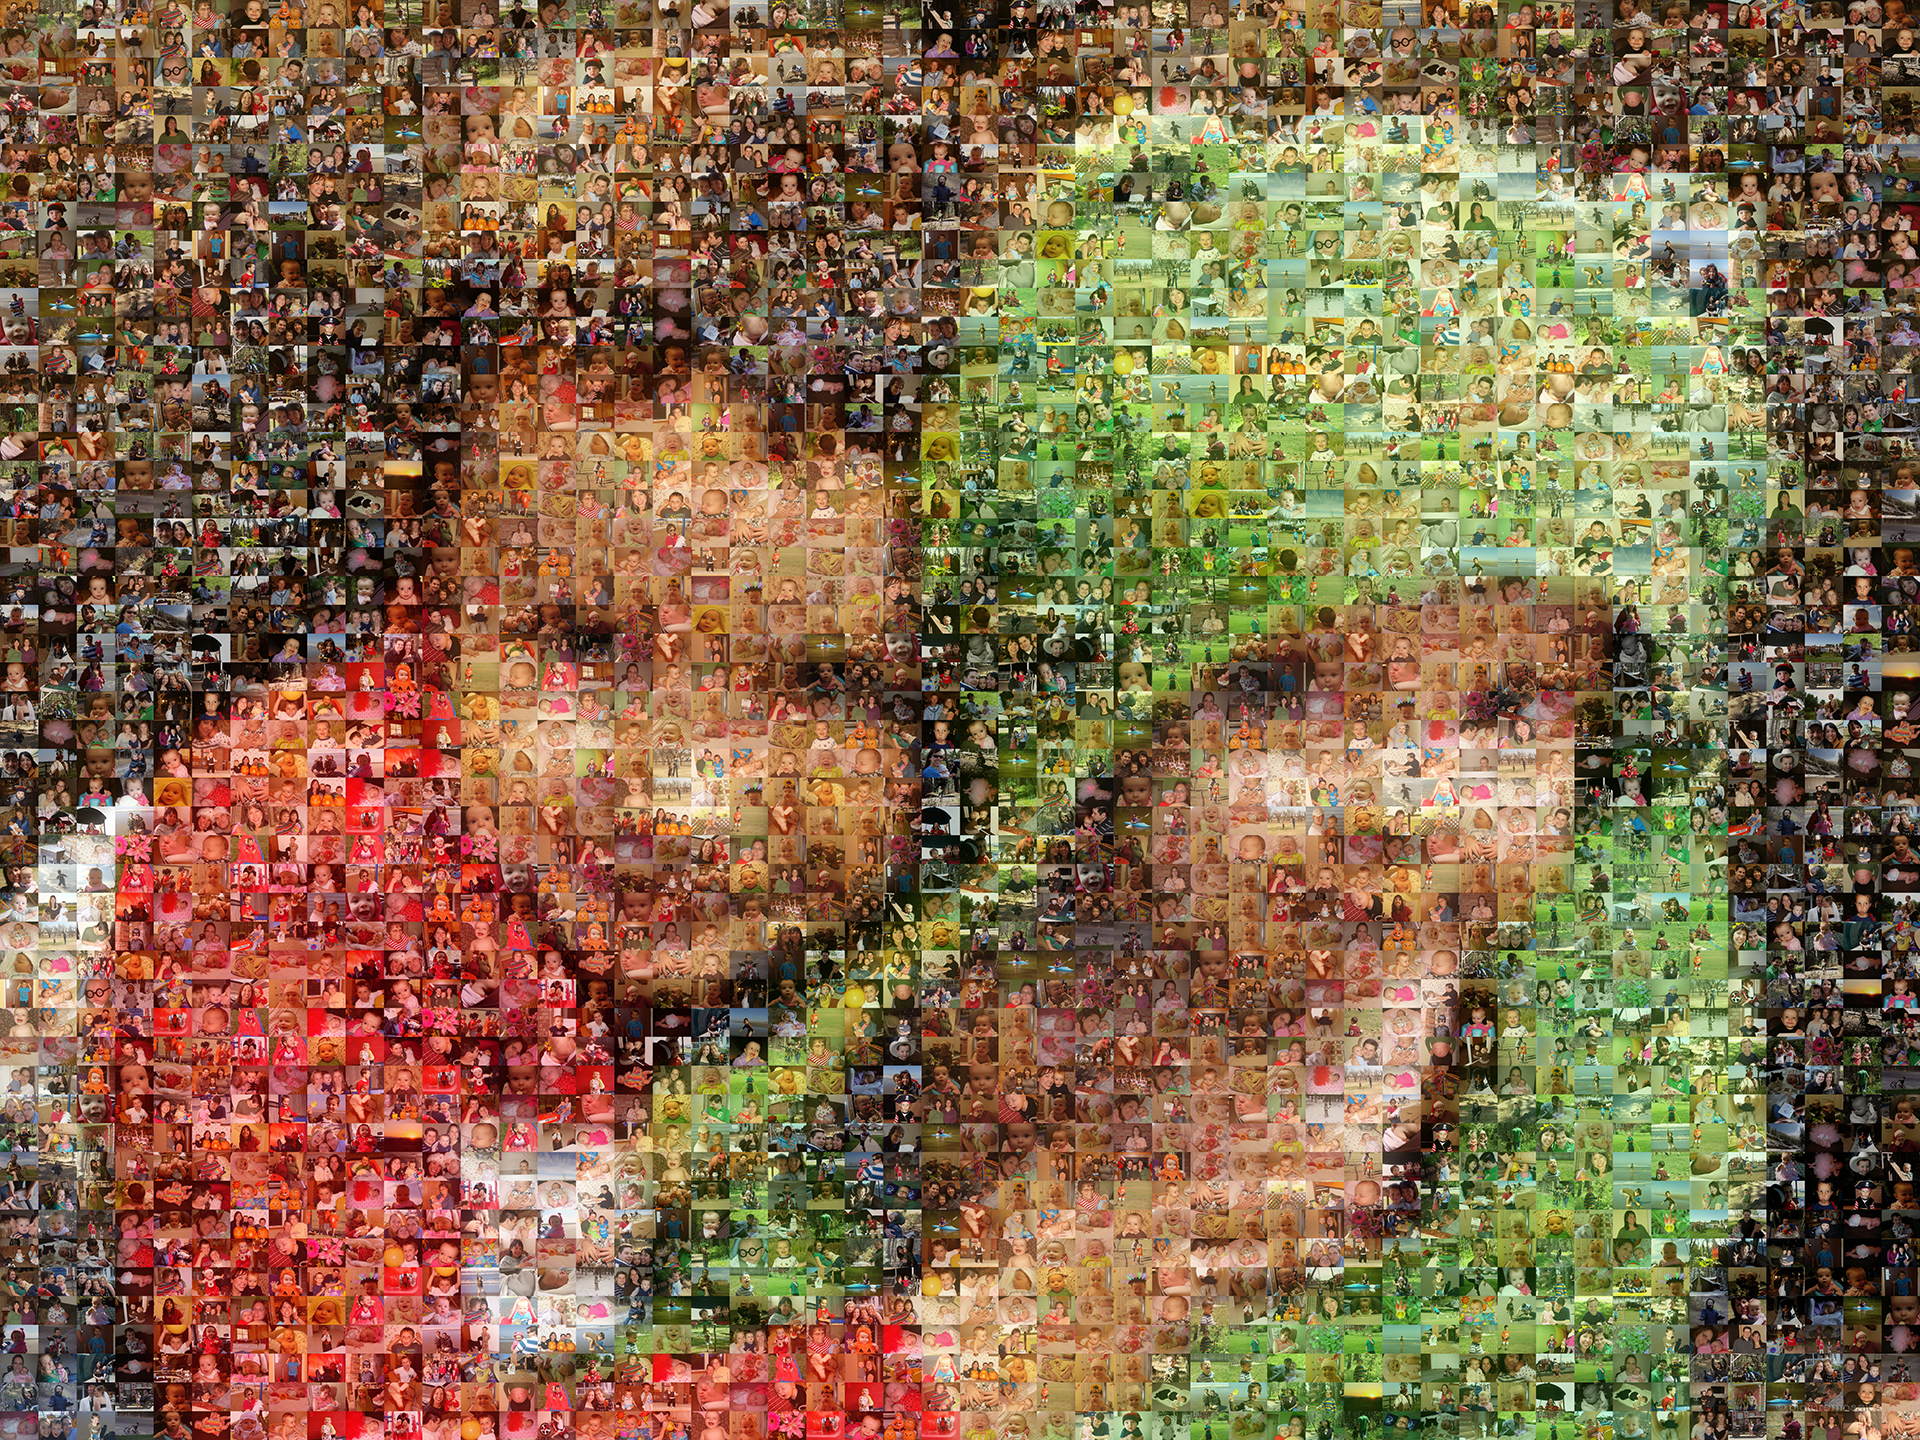 photo mosaic created using 398 family photos